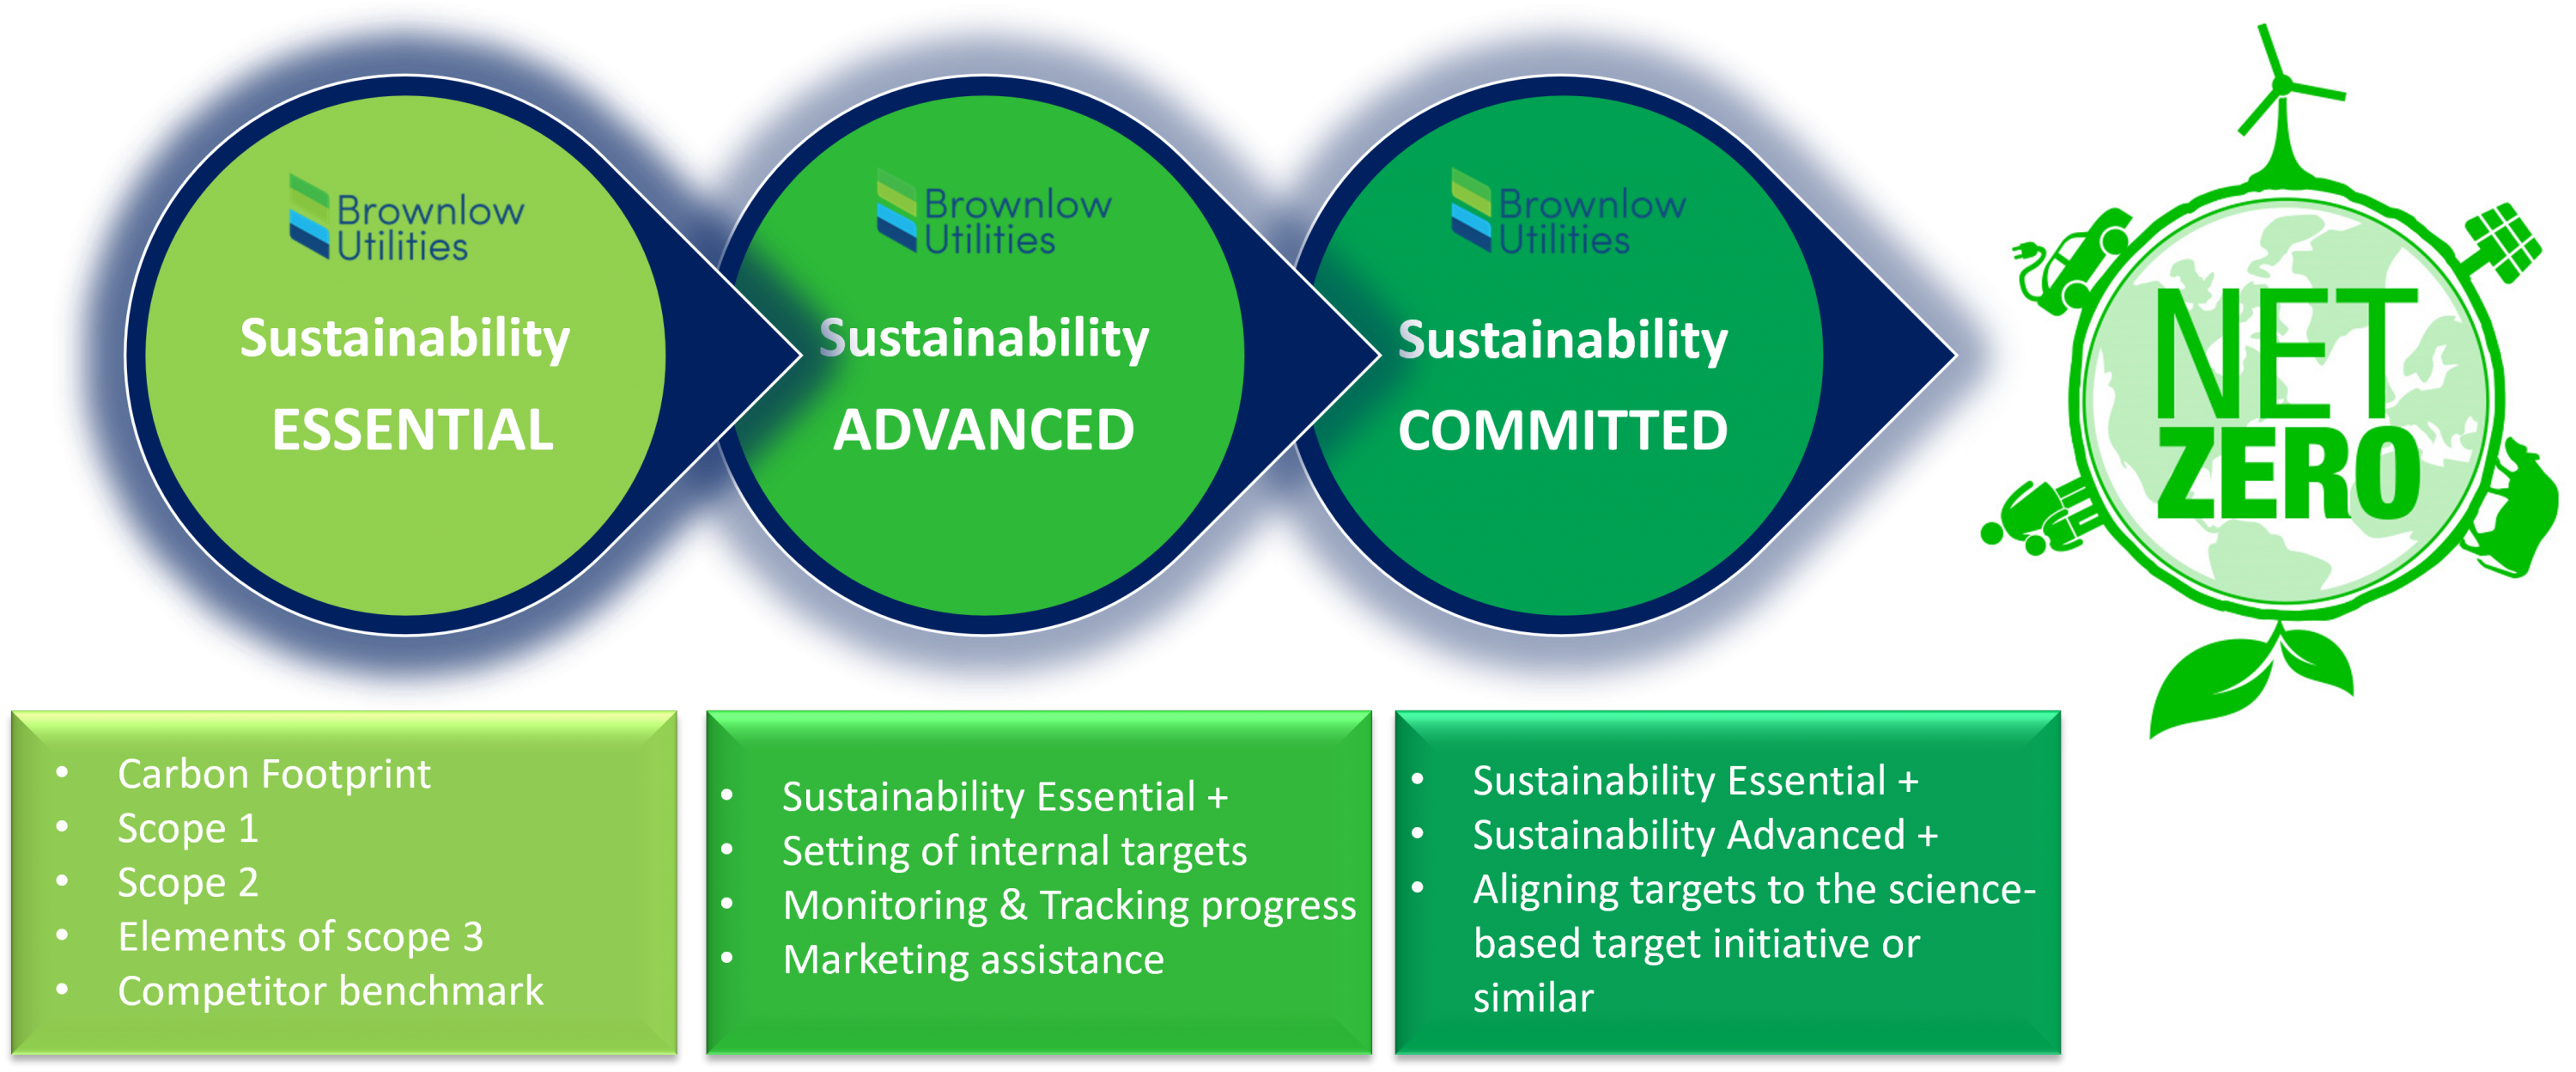 Bronwlo sustainability services